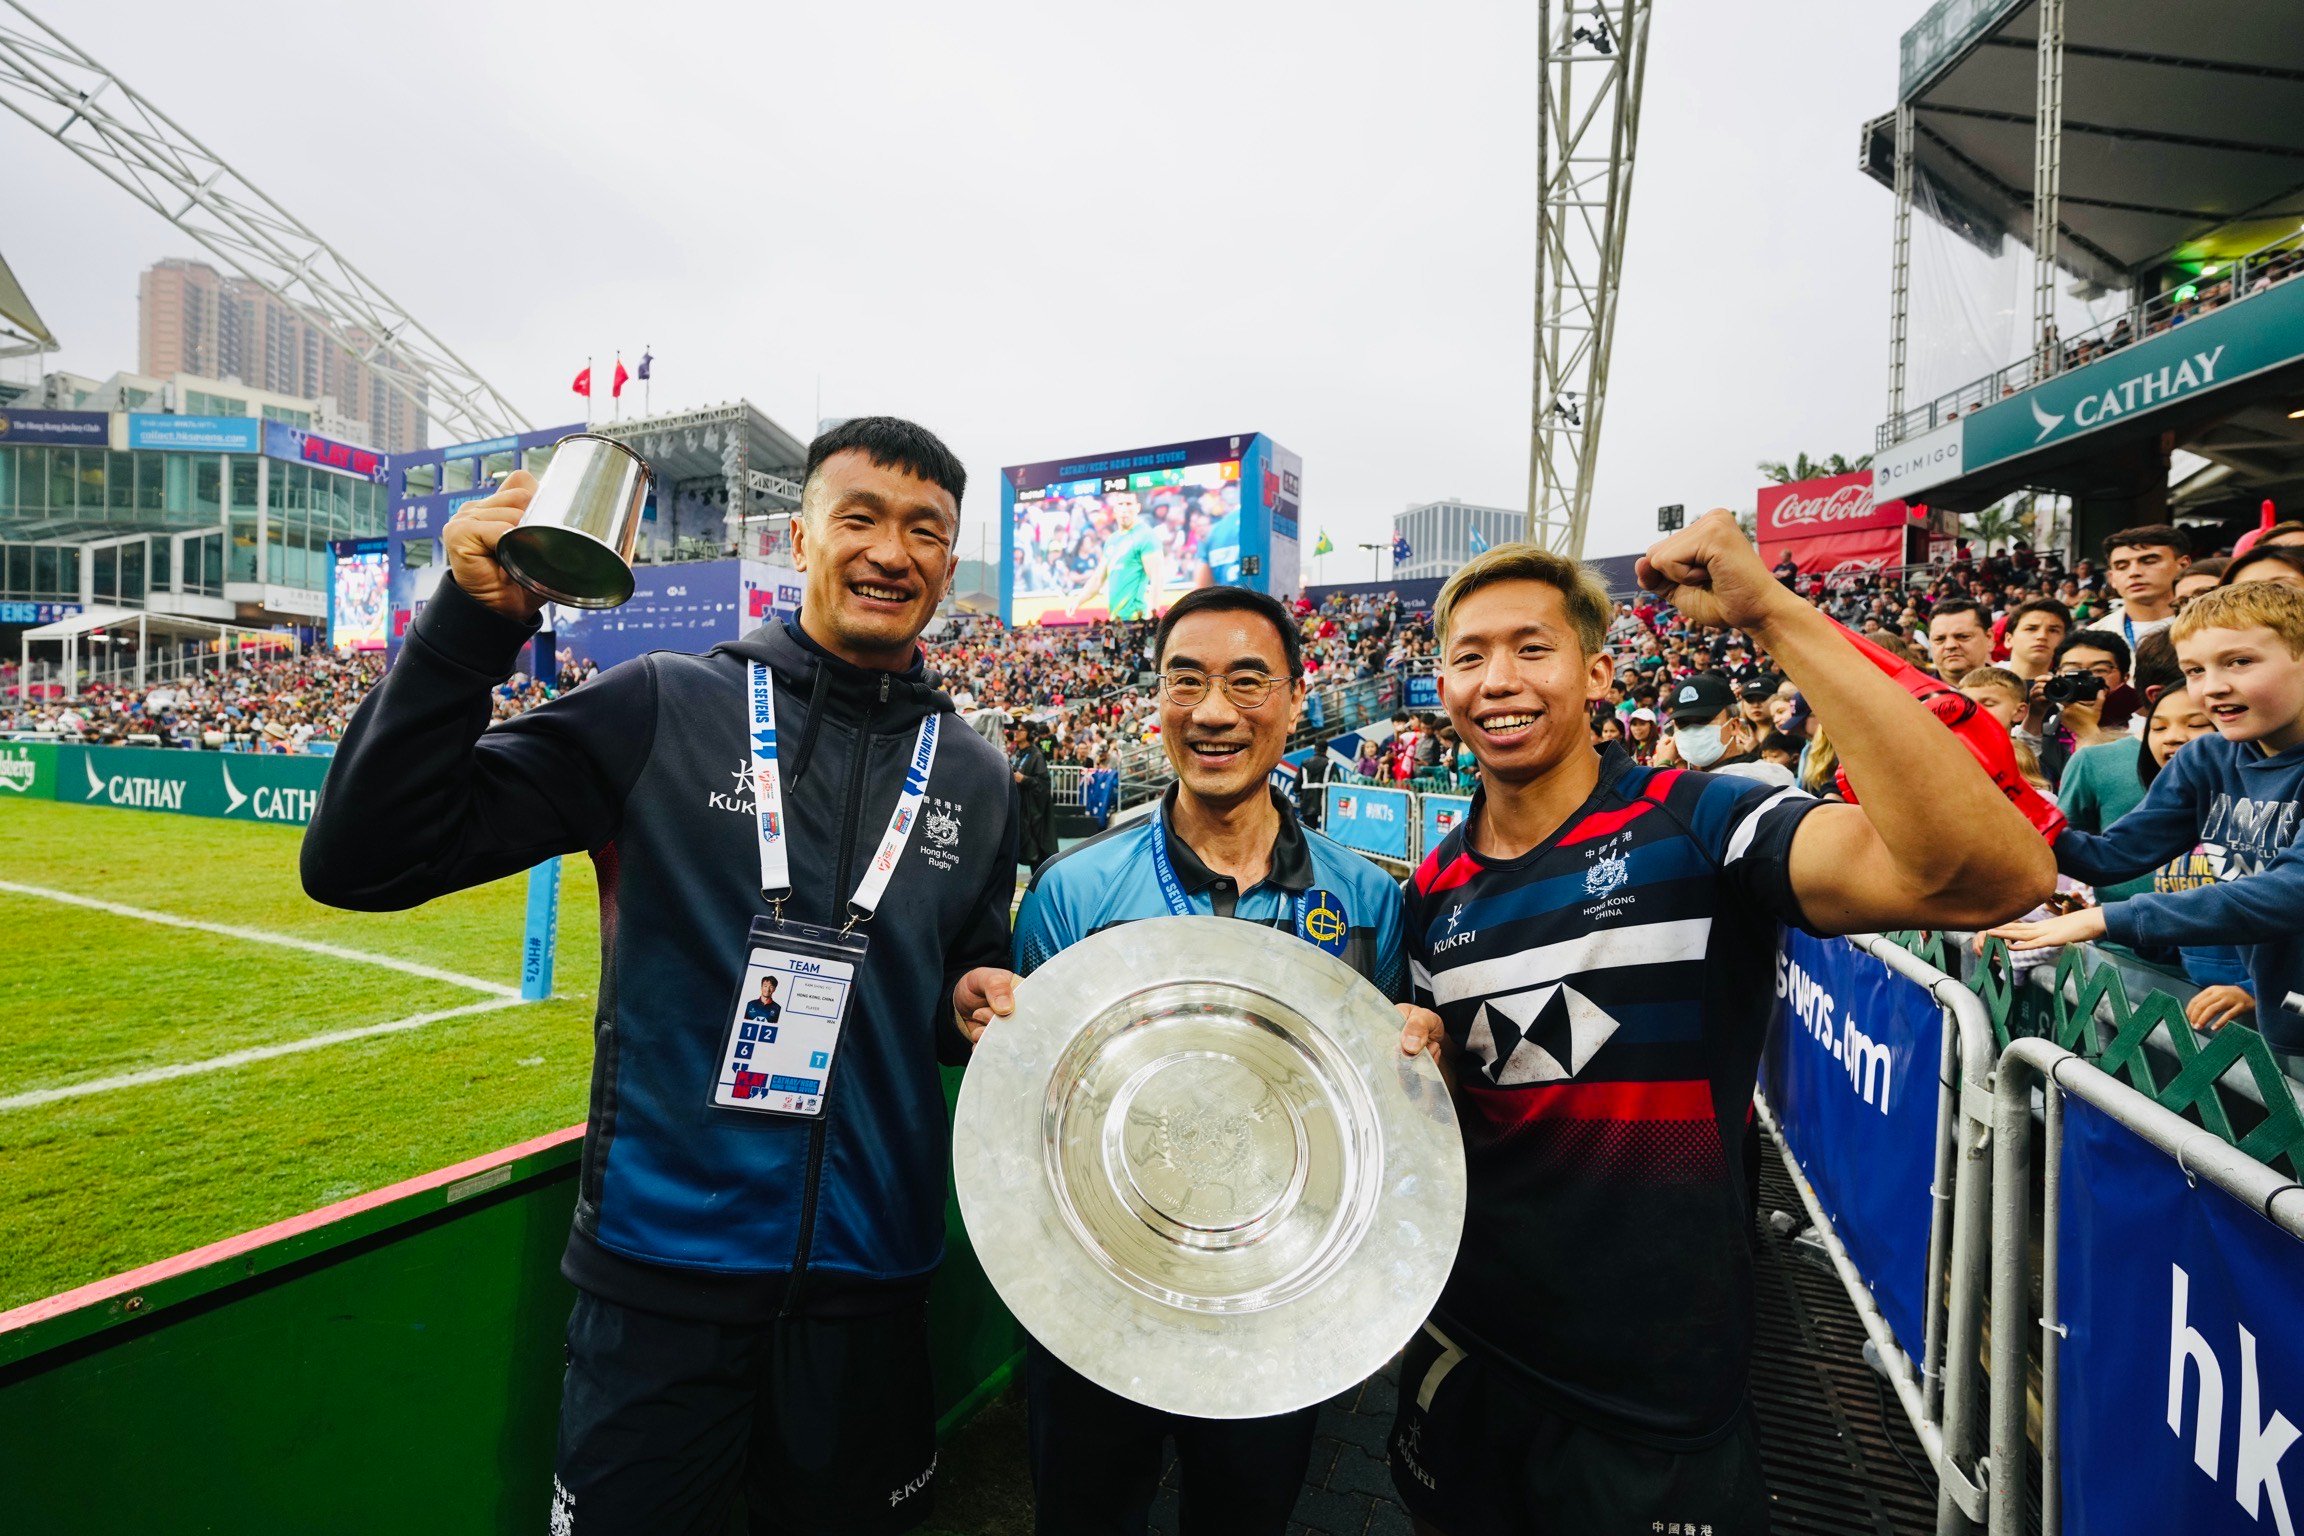 Club Chairman Michael Lee (centre) presents the Men’s Shield to the winning team – Hong Kong, China.